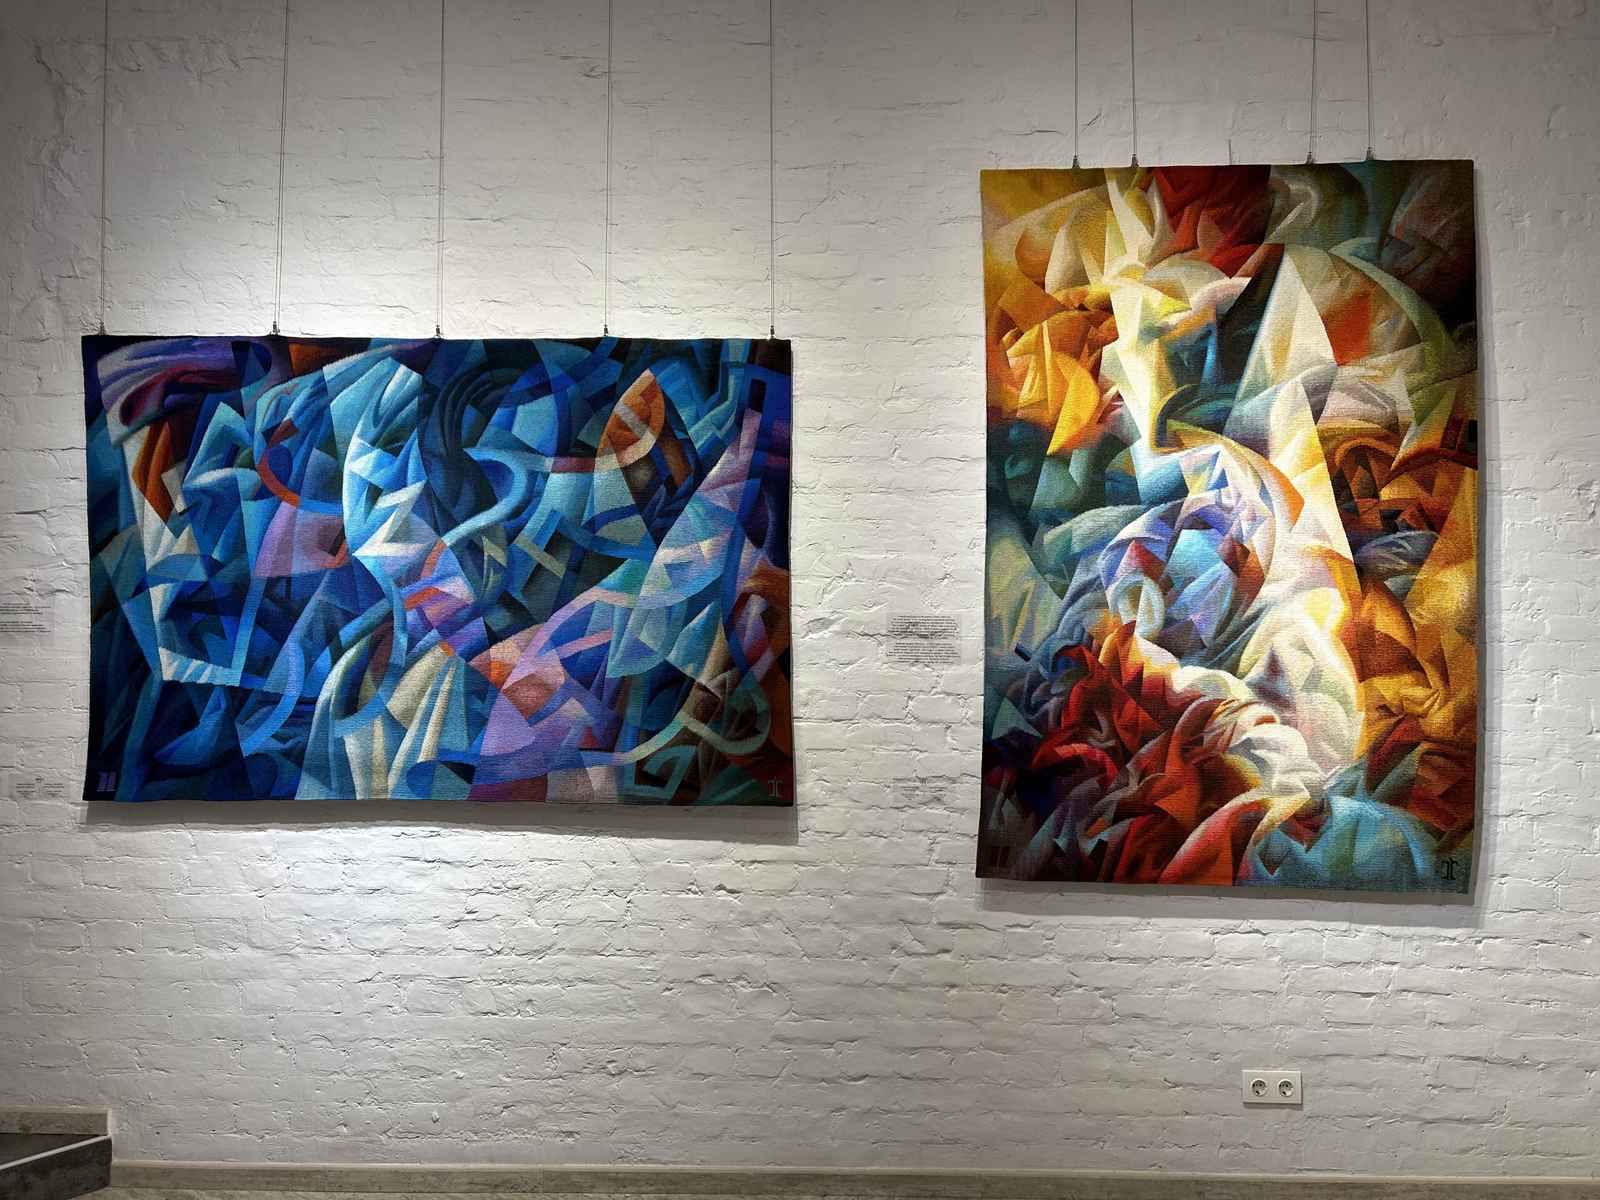 Tapestries on display at Portal 11 Gallery, Kyiv.